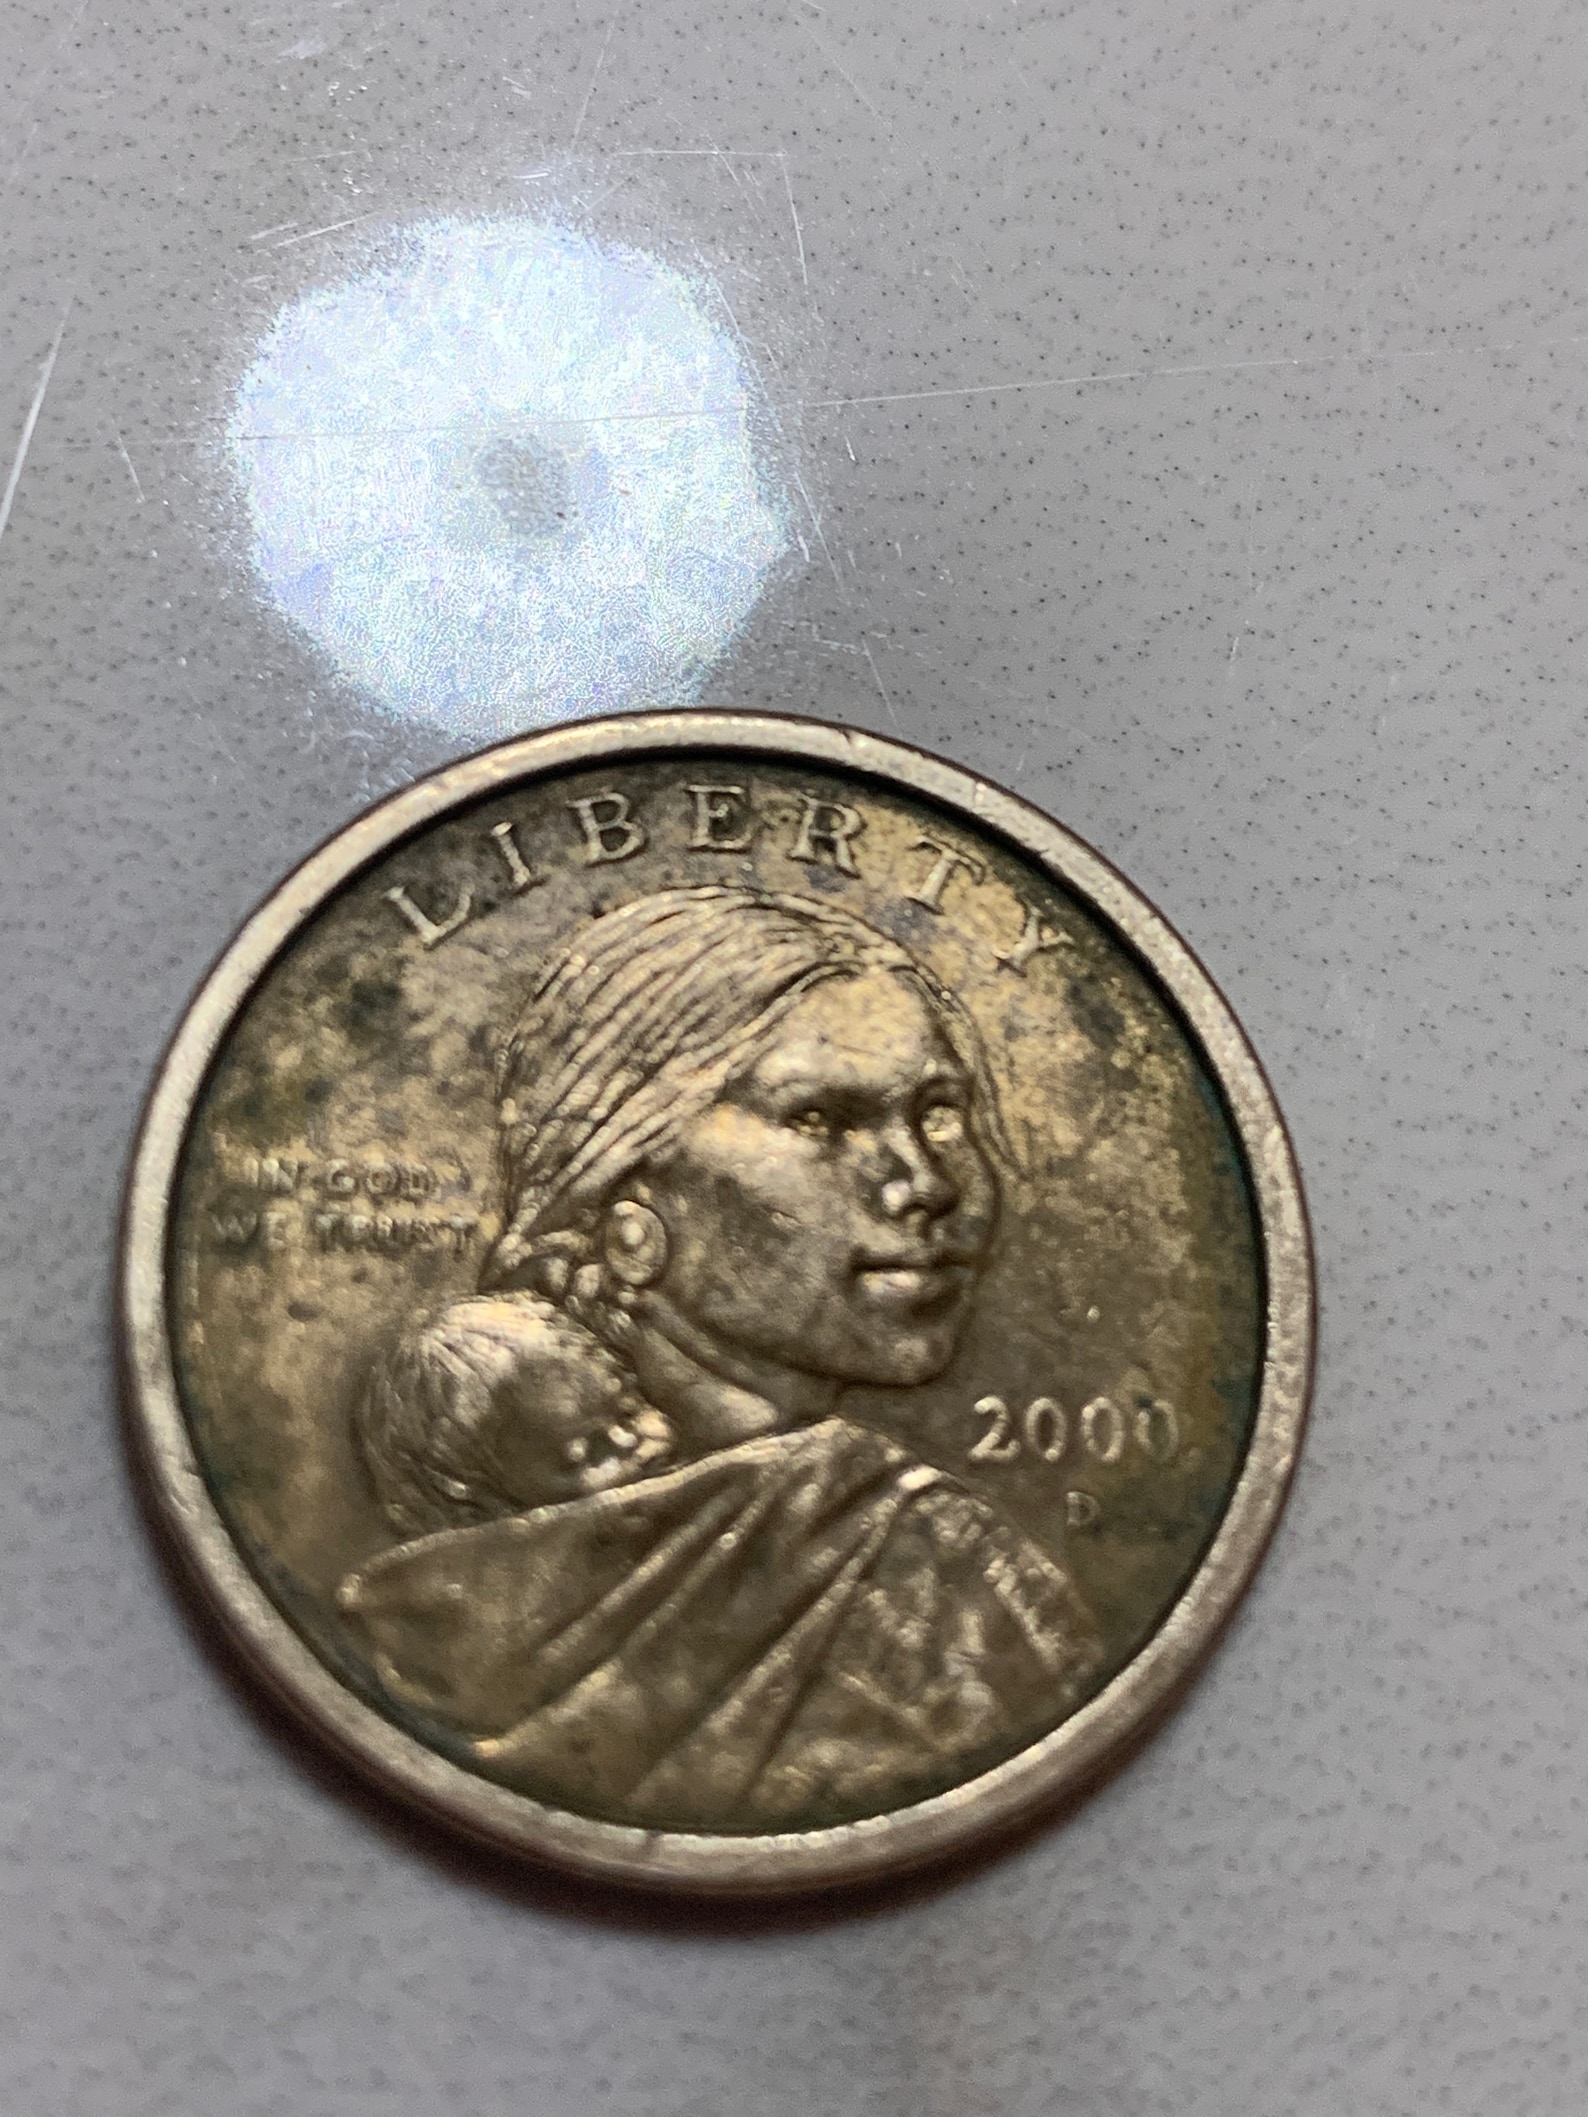 Rare Sacagawea 2000D Gold One Dollar Coin | Etsy